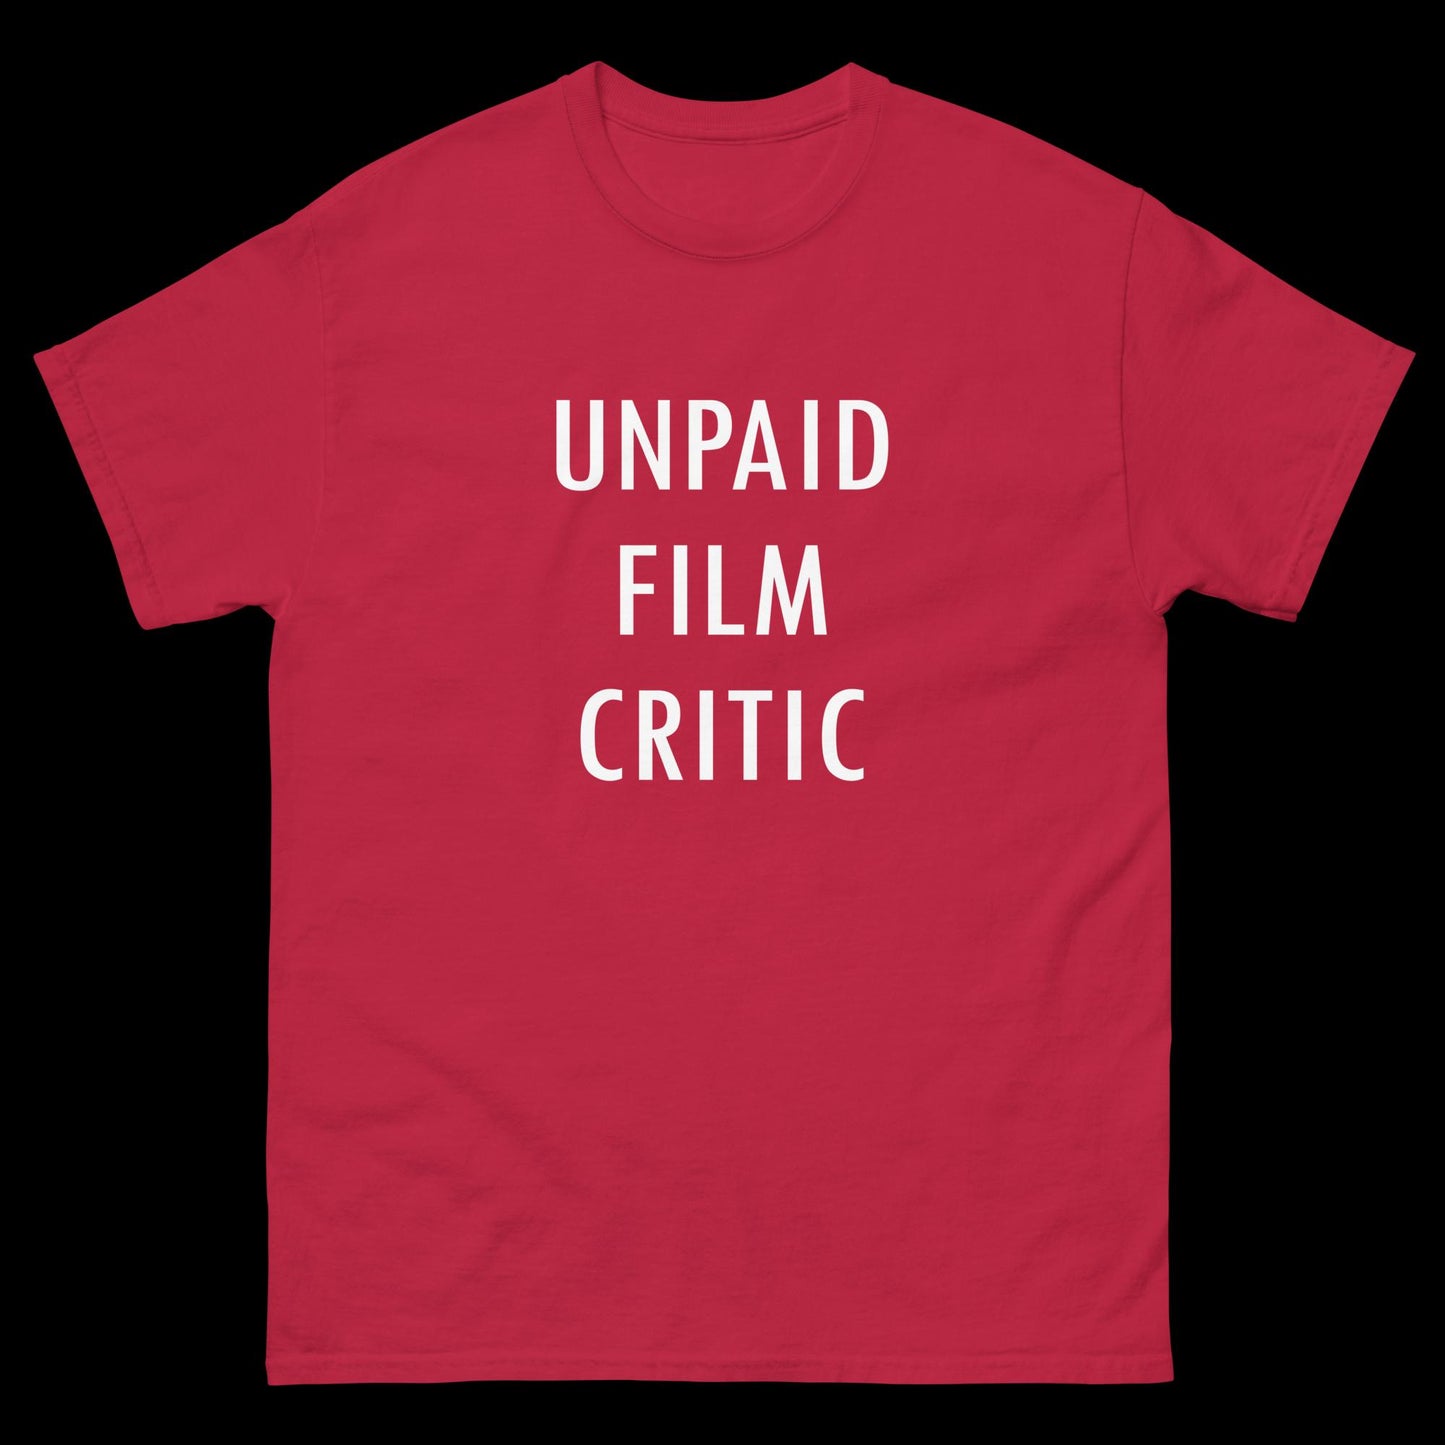 Unpaid Film Critic - Classic T-Shirt